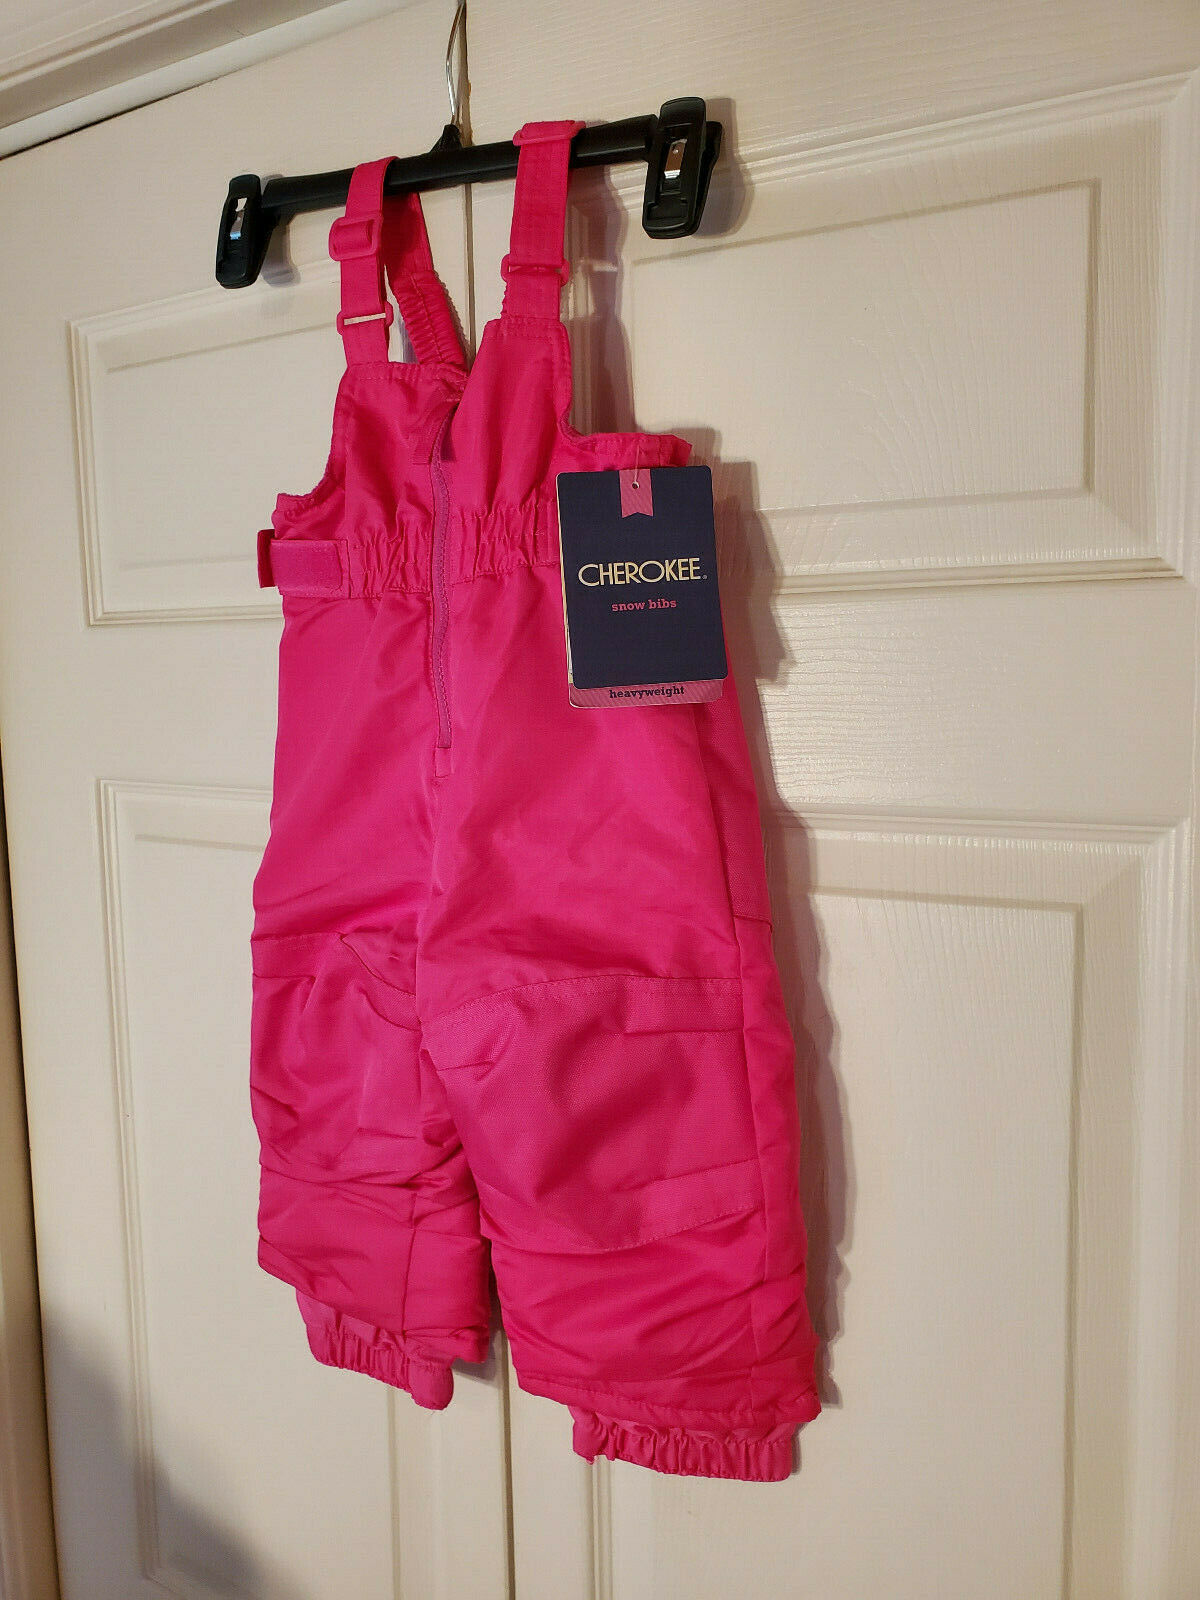 CHEROKEE Snow Bibs Girl's Snow Suit Pink Size 12M (NEW) - $19.75